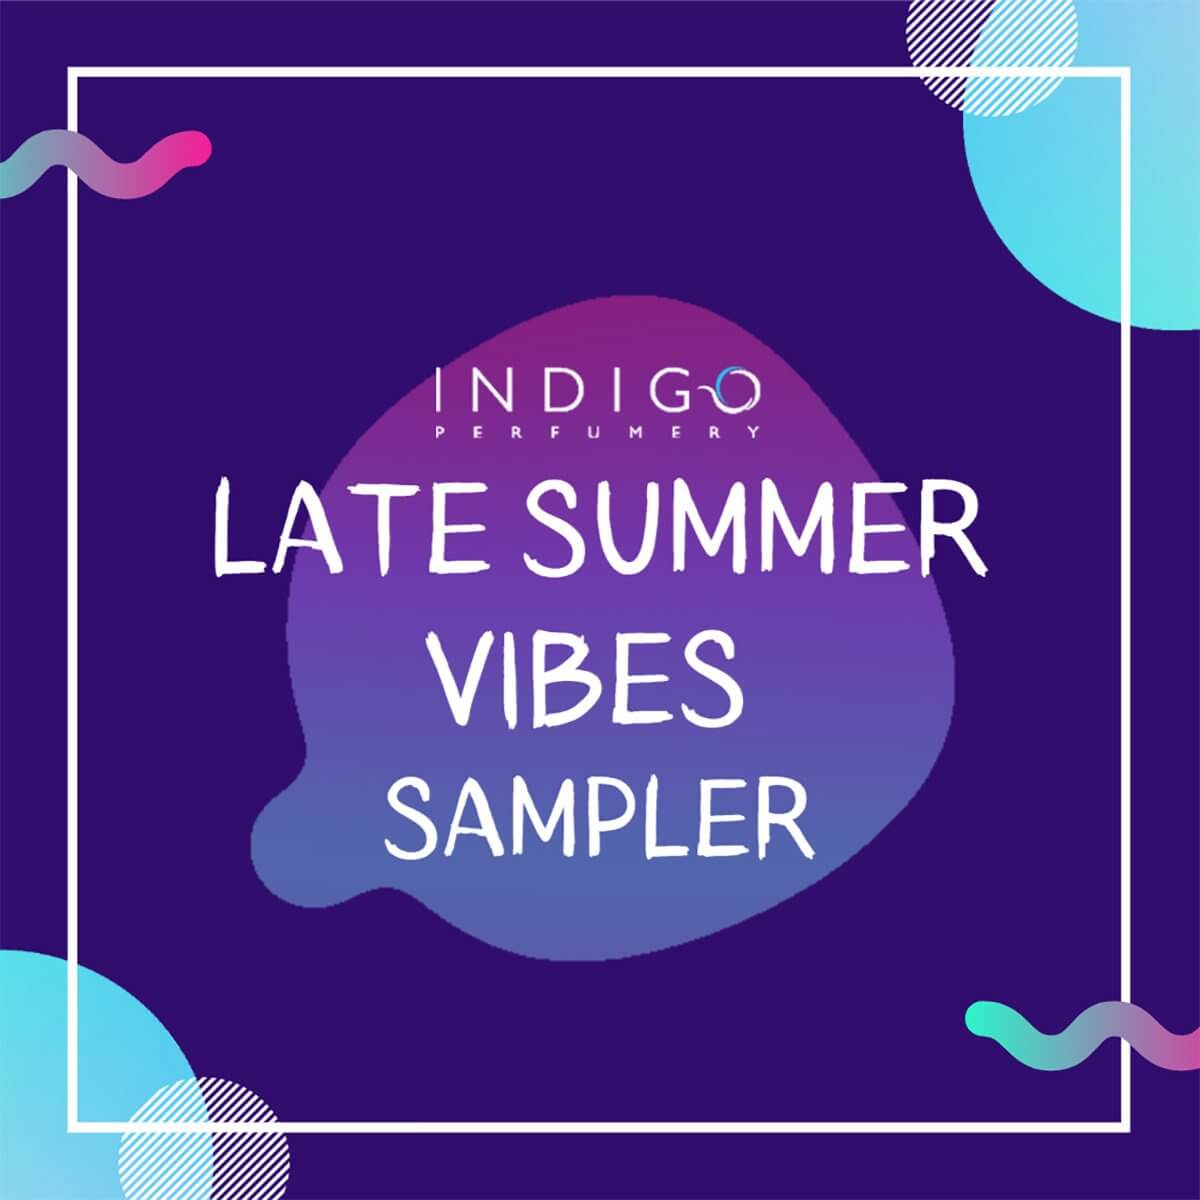 Late Summer Vibes Sampler at Indigo Perfumery